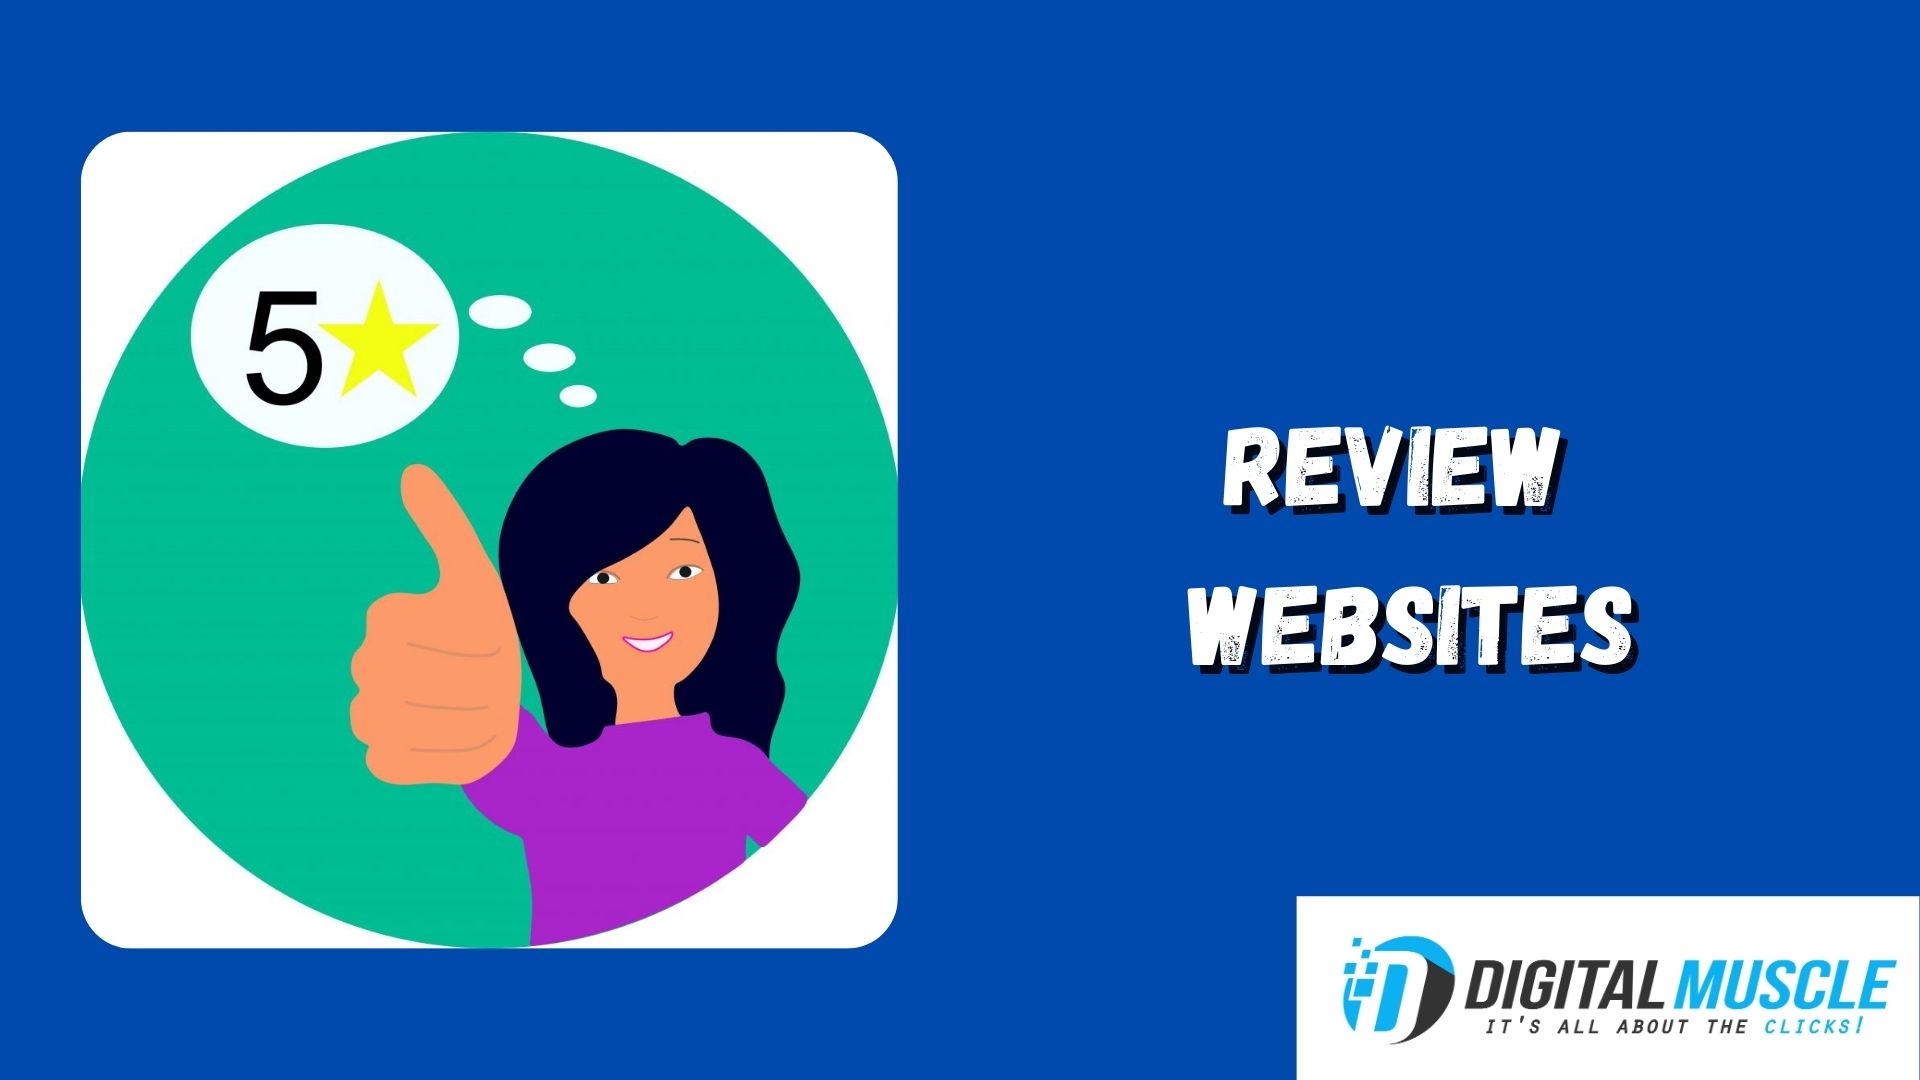 Review Websites